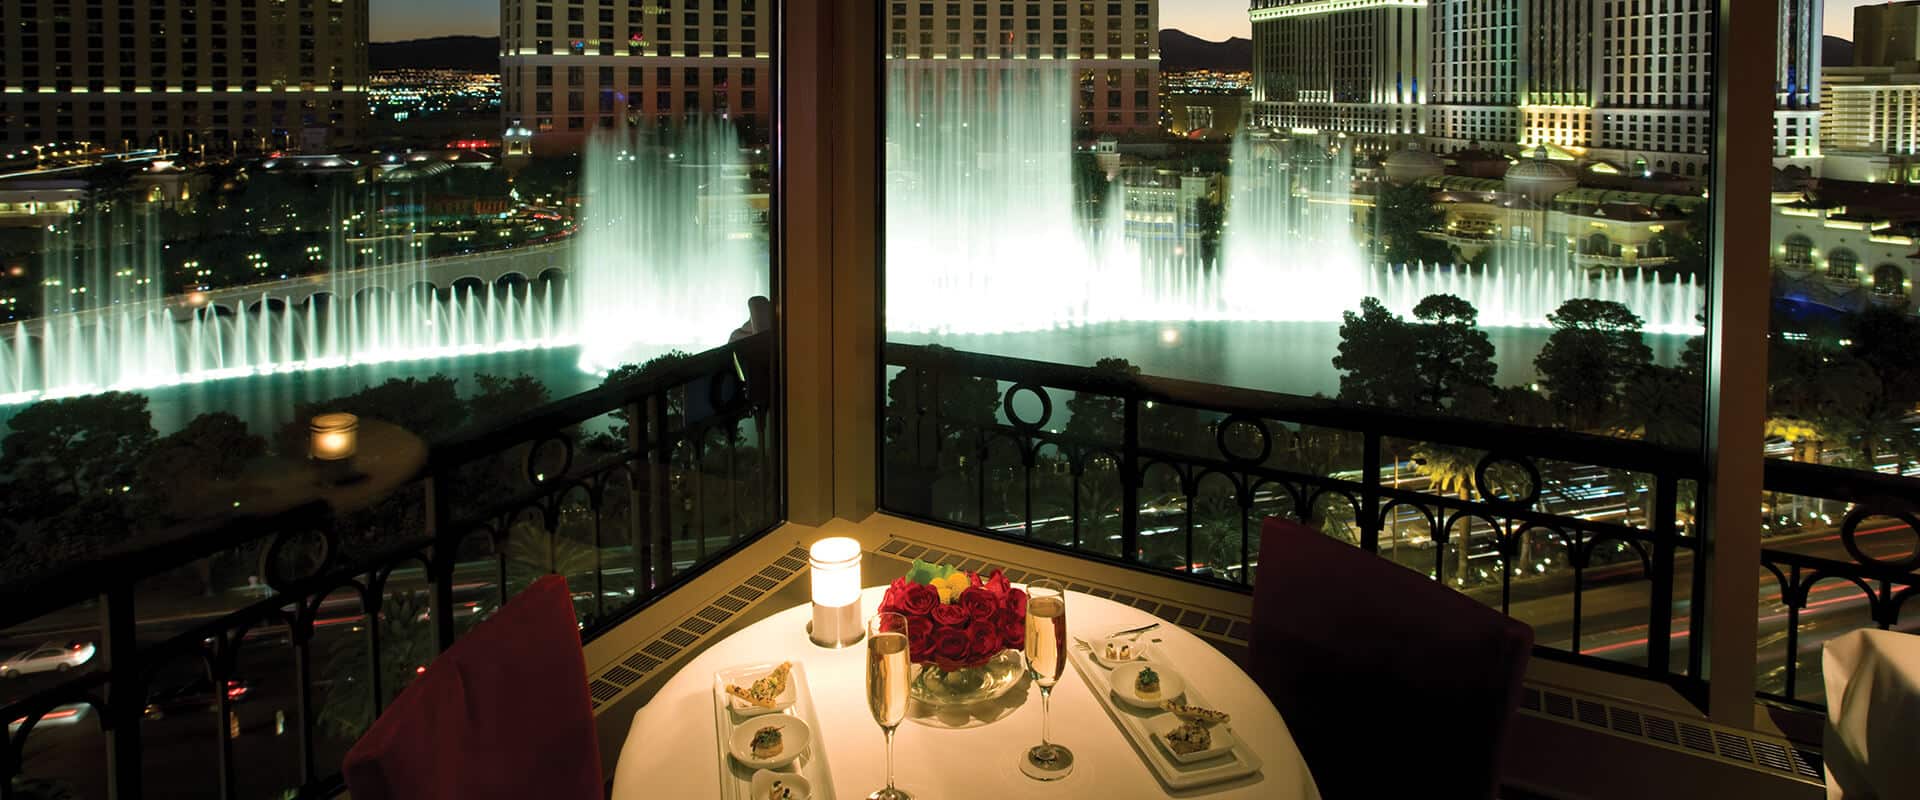 Paris Las Vegas Restaurants: A Foodies Guide to Dining in Vegas